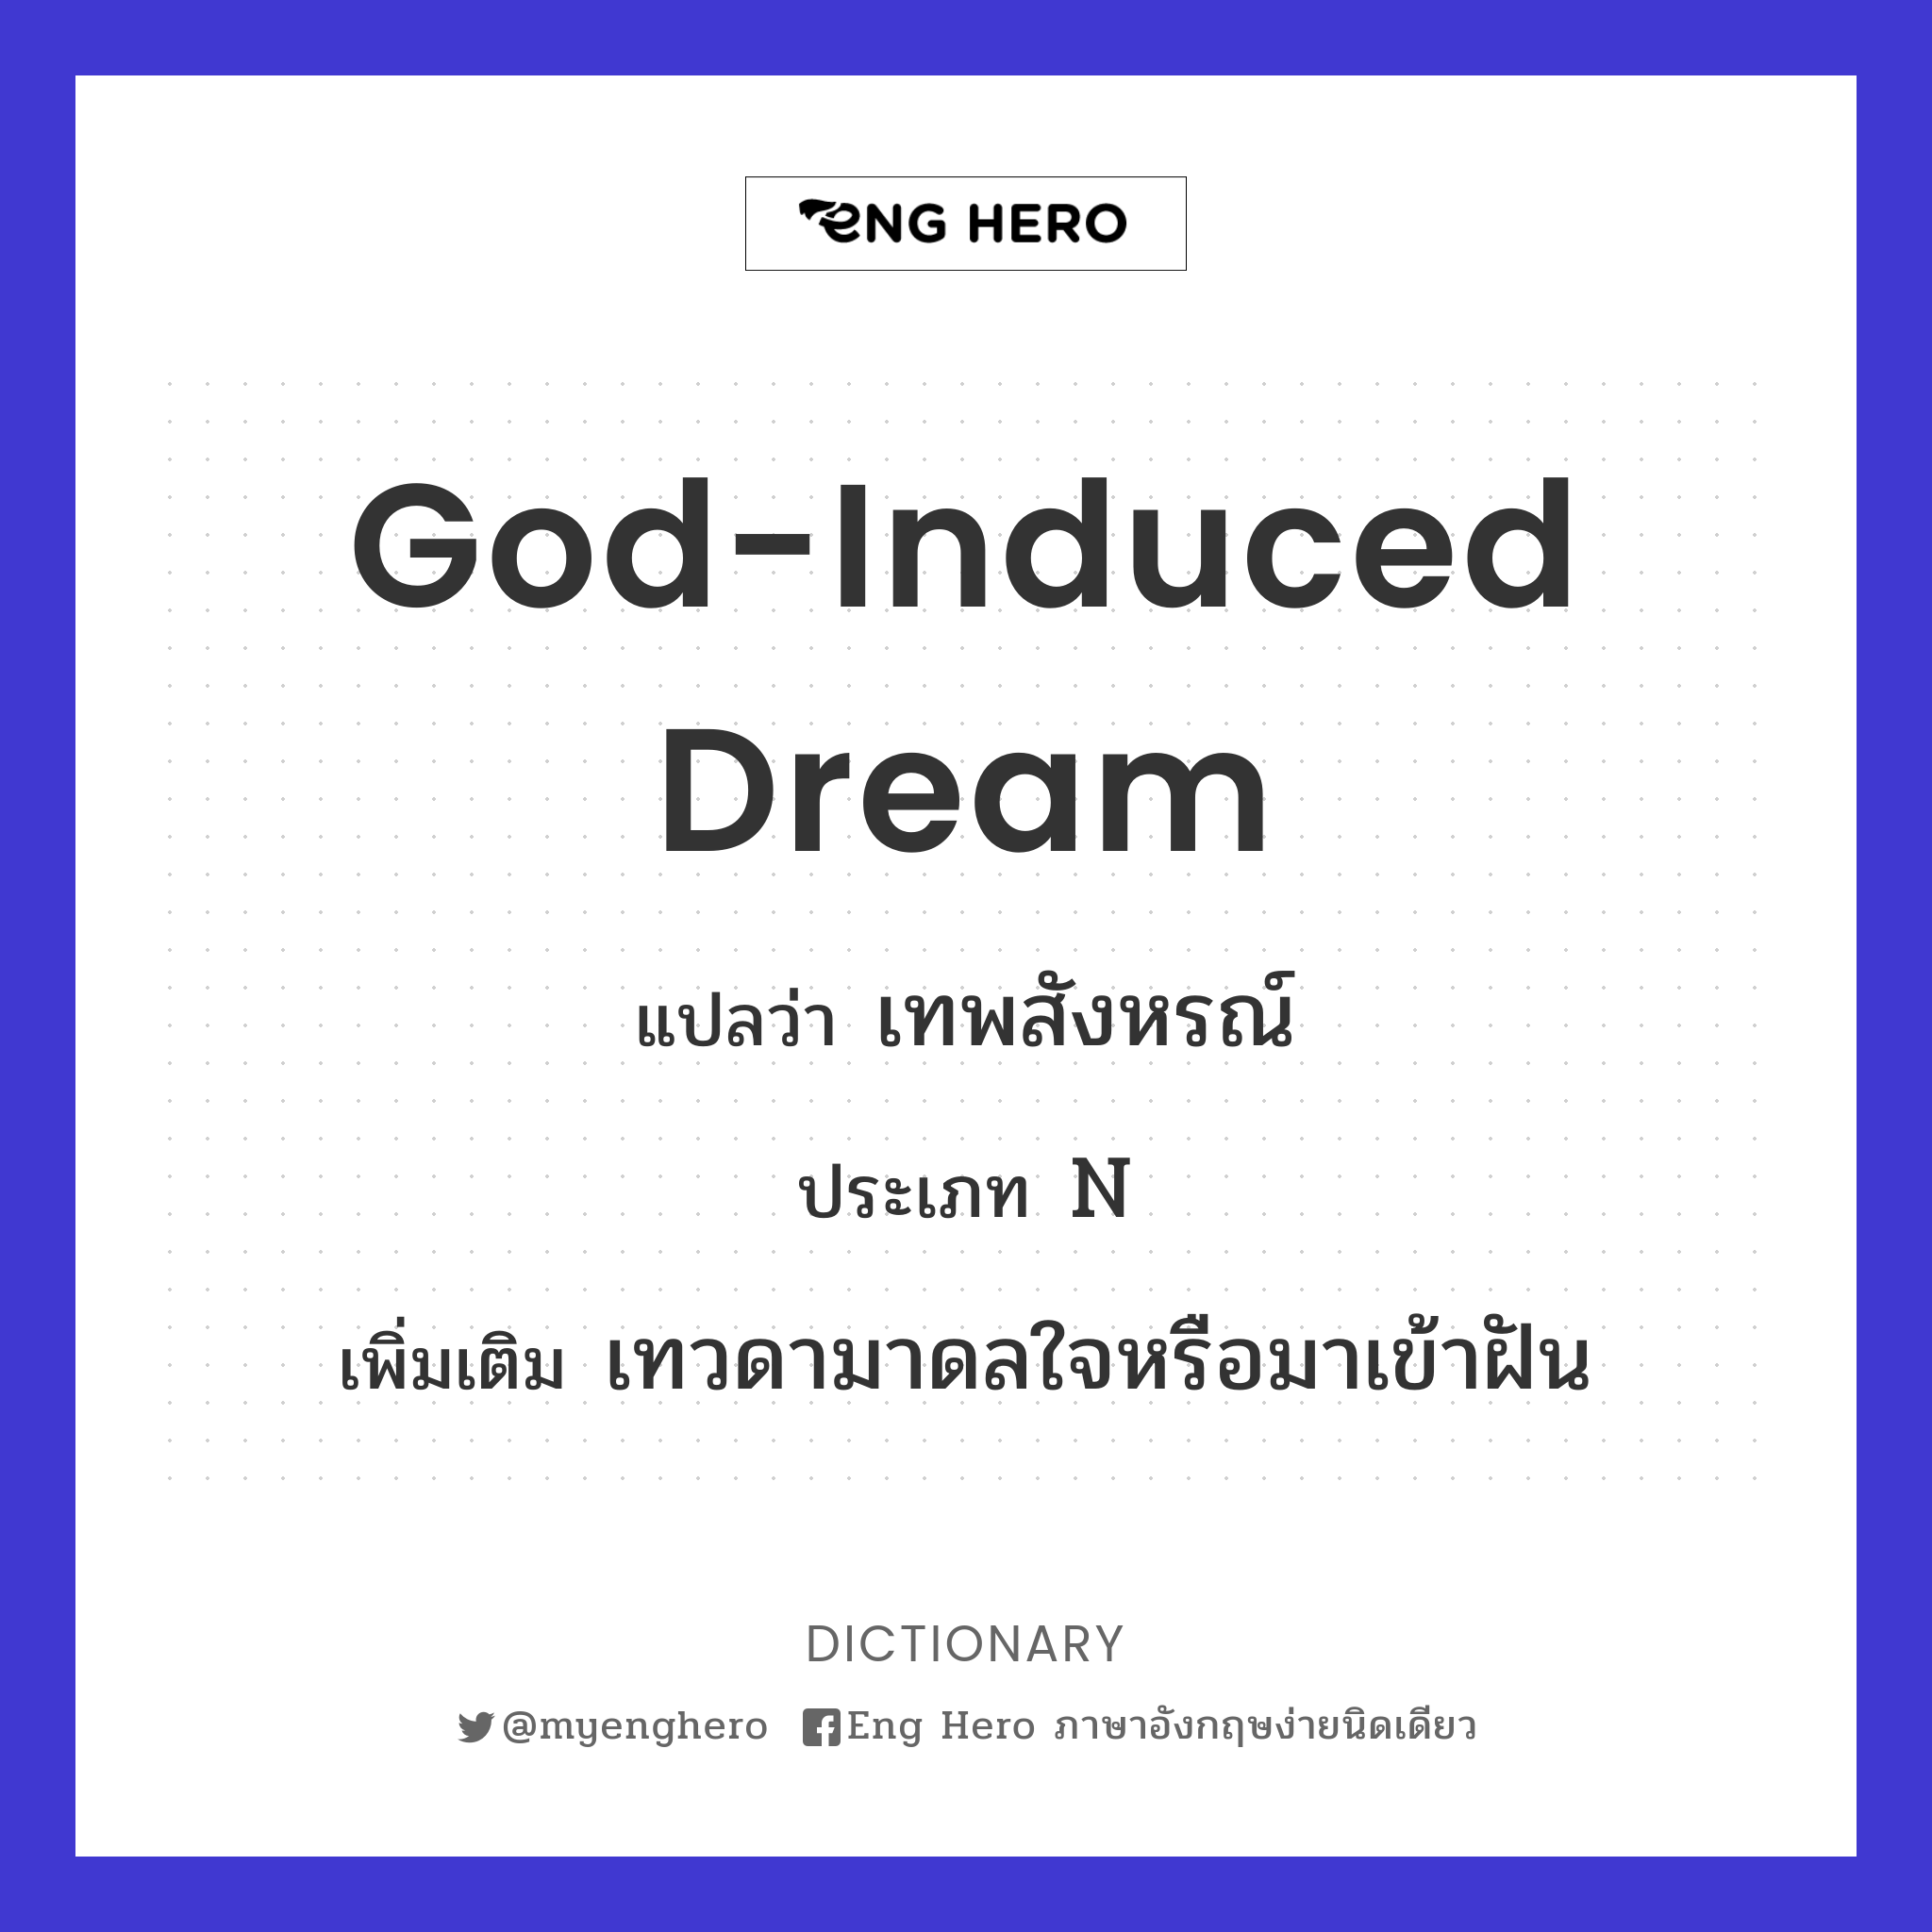 God-induced dream